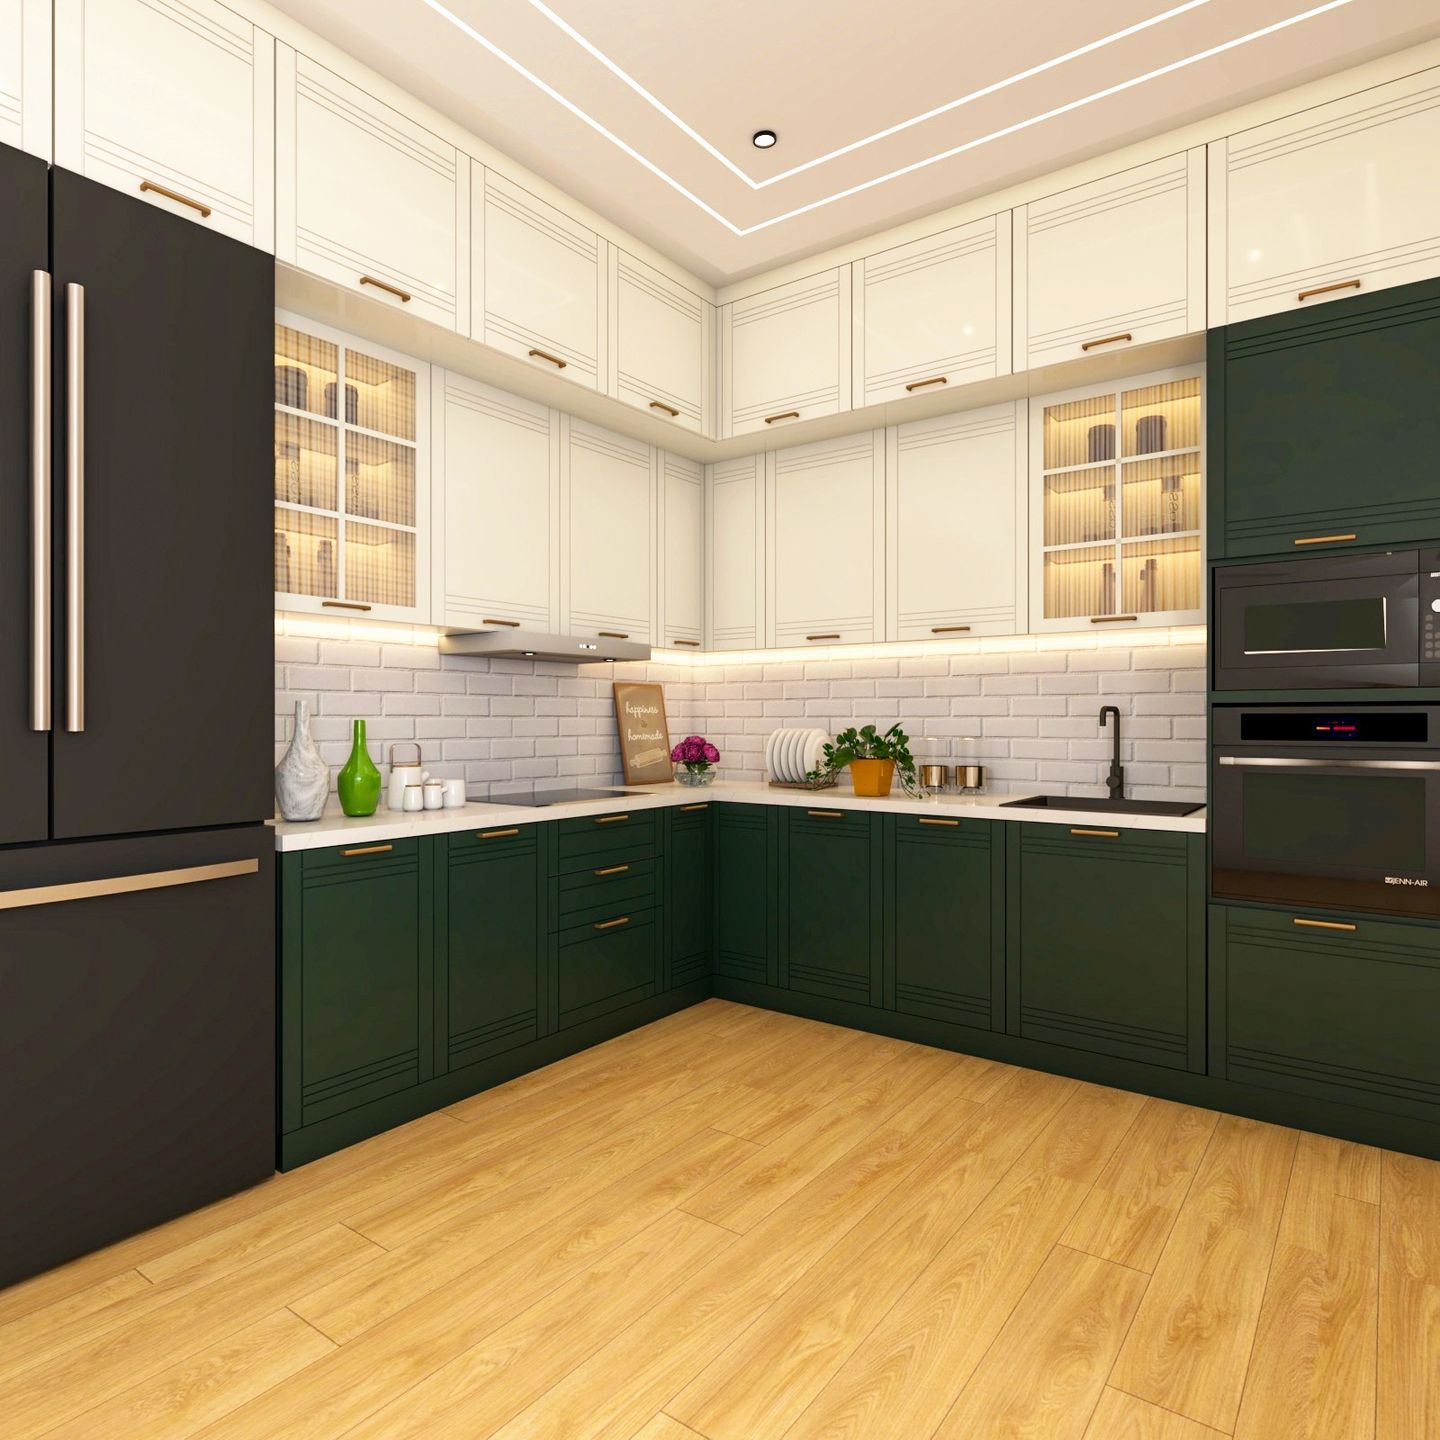 13x13 Ft Modular L-Shaped Kitchen Design With Dark Green Verde Alpino And White Cabinets - Livspace